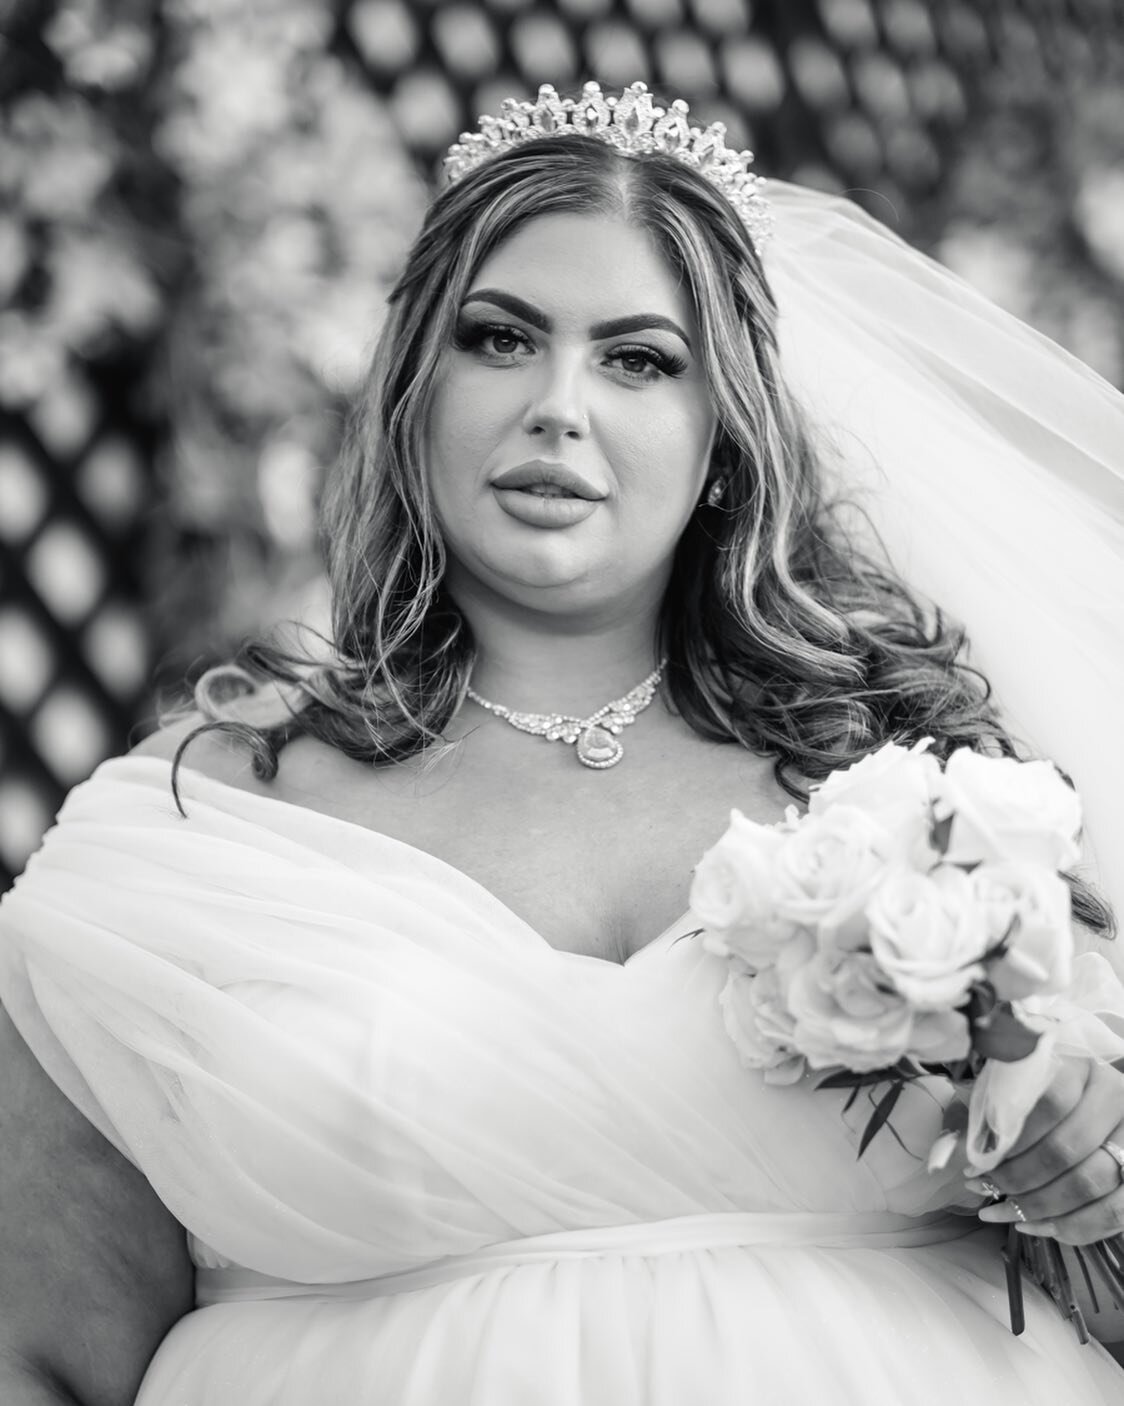 👑 👰🏻&zwj;♀️ 💅🏼

Mrs Morton edited in a soft, etherial style, low contrast black &amp; white 📸

👰🏻&zwj;♀️ @plussizecharl 👰🏻&zwj;♀️

#brides #bridalportraits #bridemakeup #brideaccessories #weddingphotographers